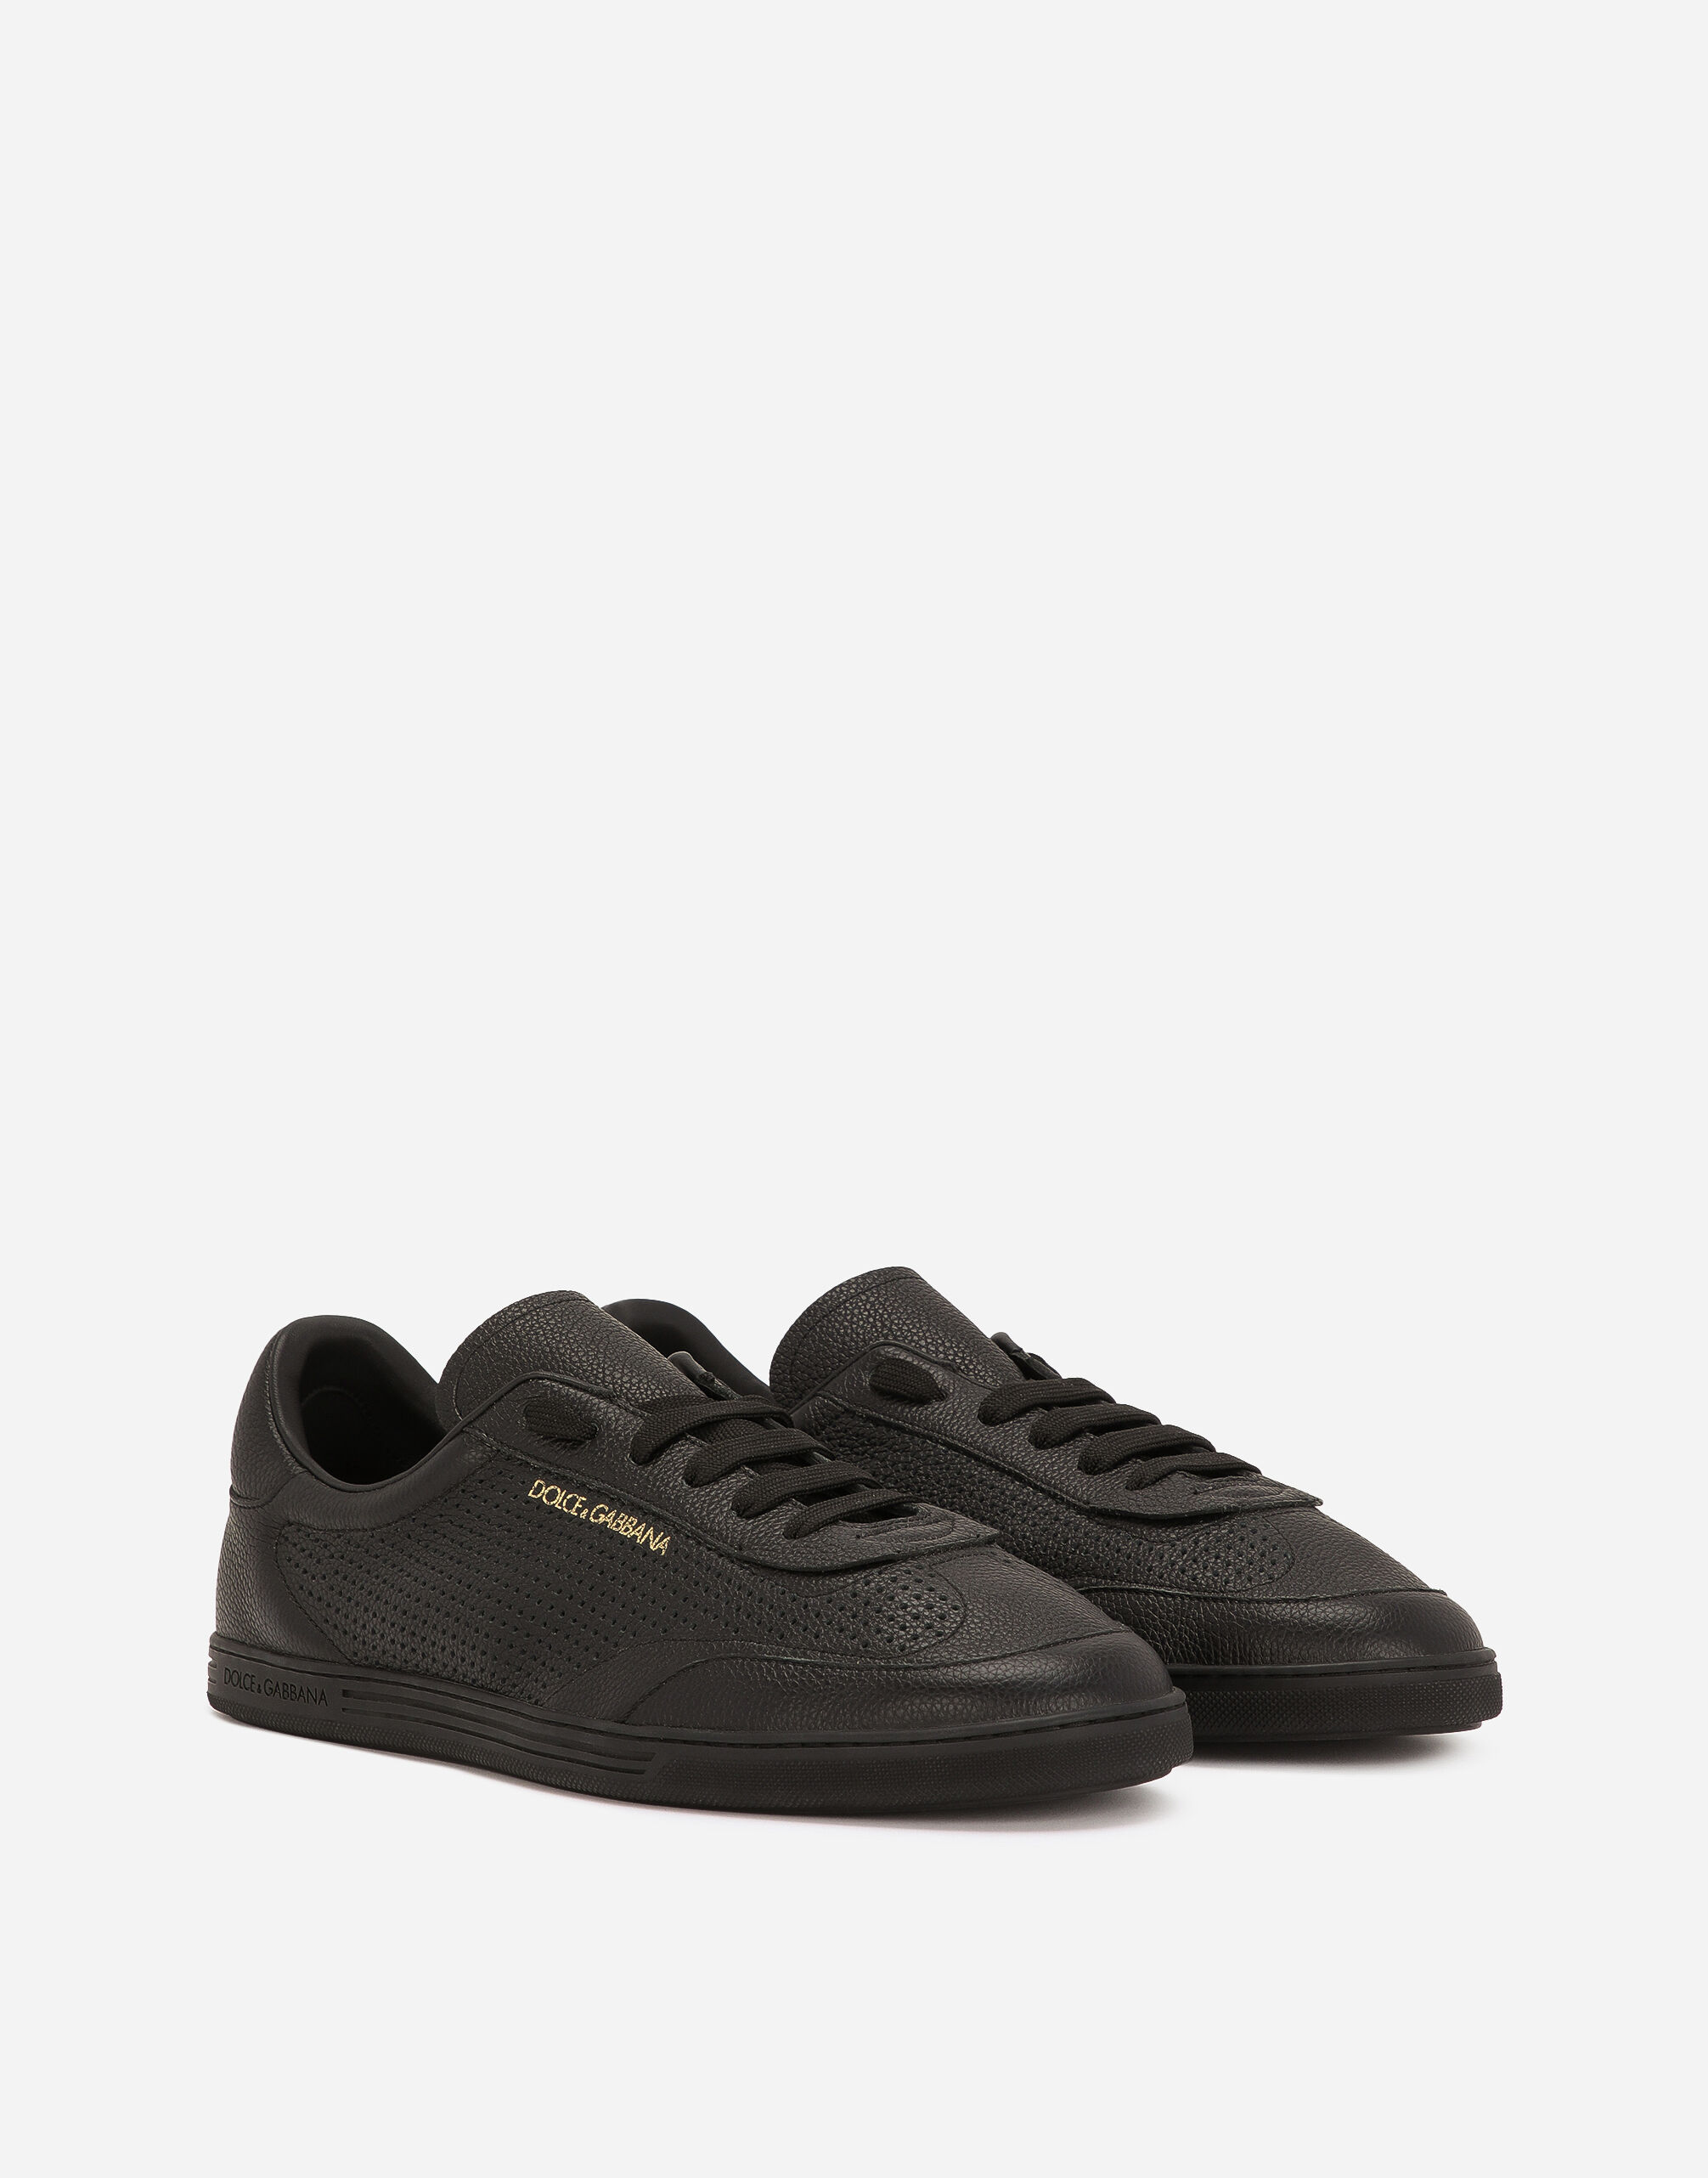 Perforated calfskin Saint Tropez sneakers in Black for Men 